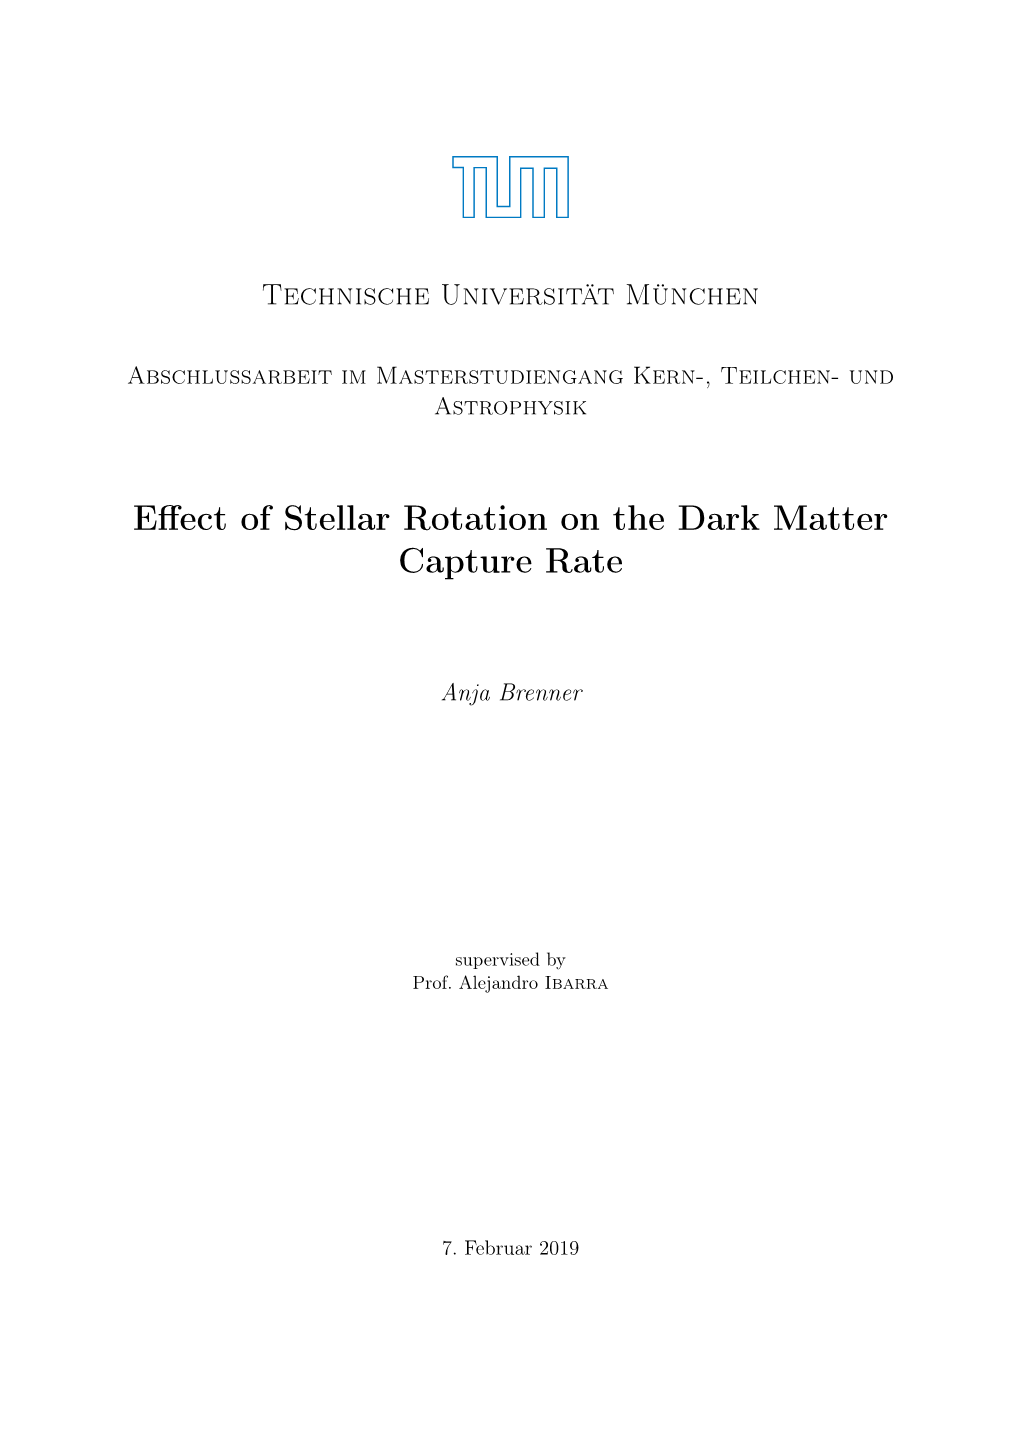 Effect of Stellar Rotation on the Dark Matter Capture Rate